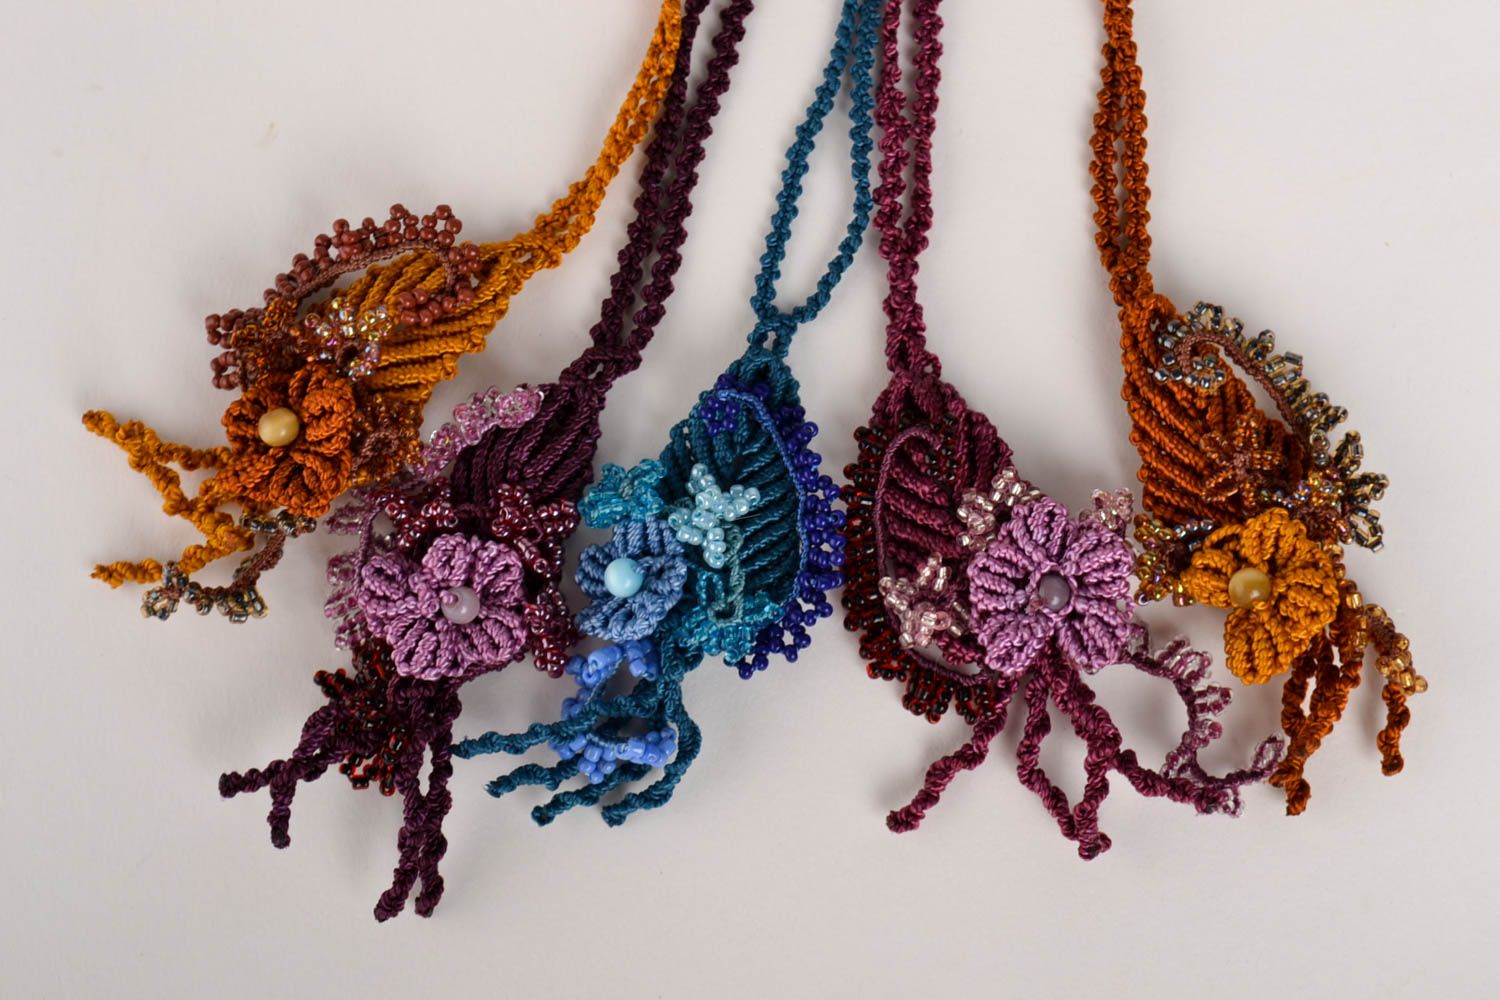 Handmade pendant fashion thread jewelry 5 pieces gift for women macrame ideas photo 3